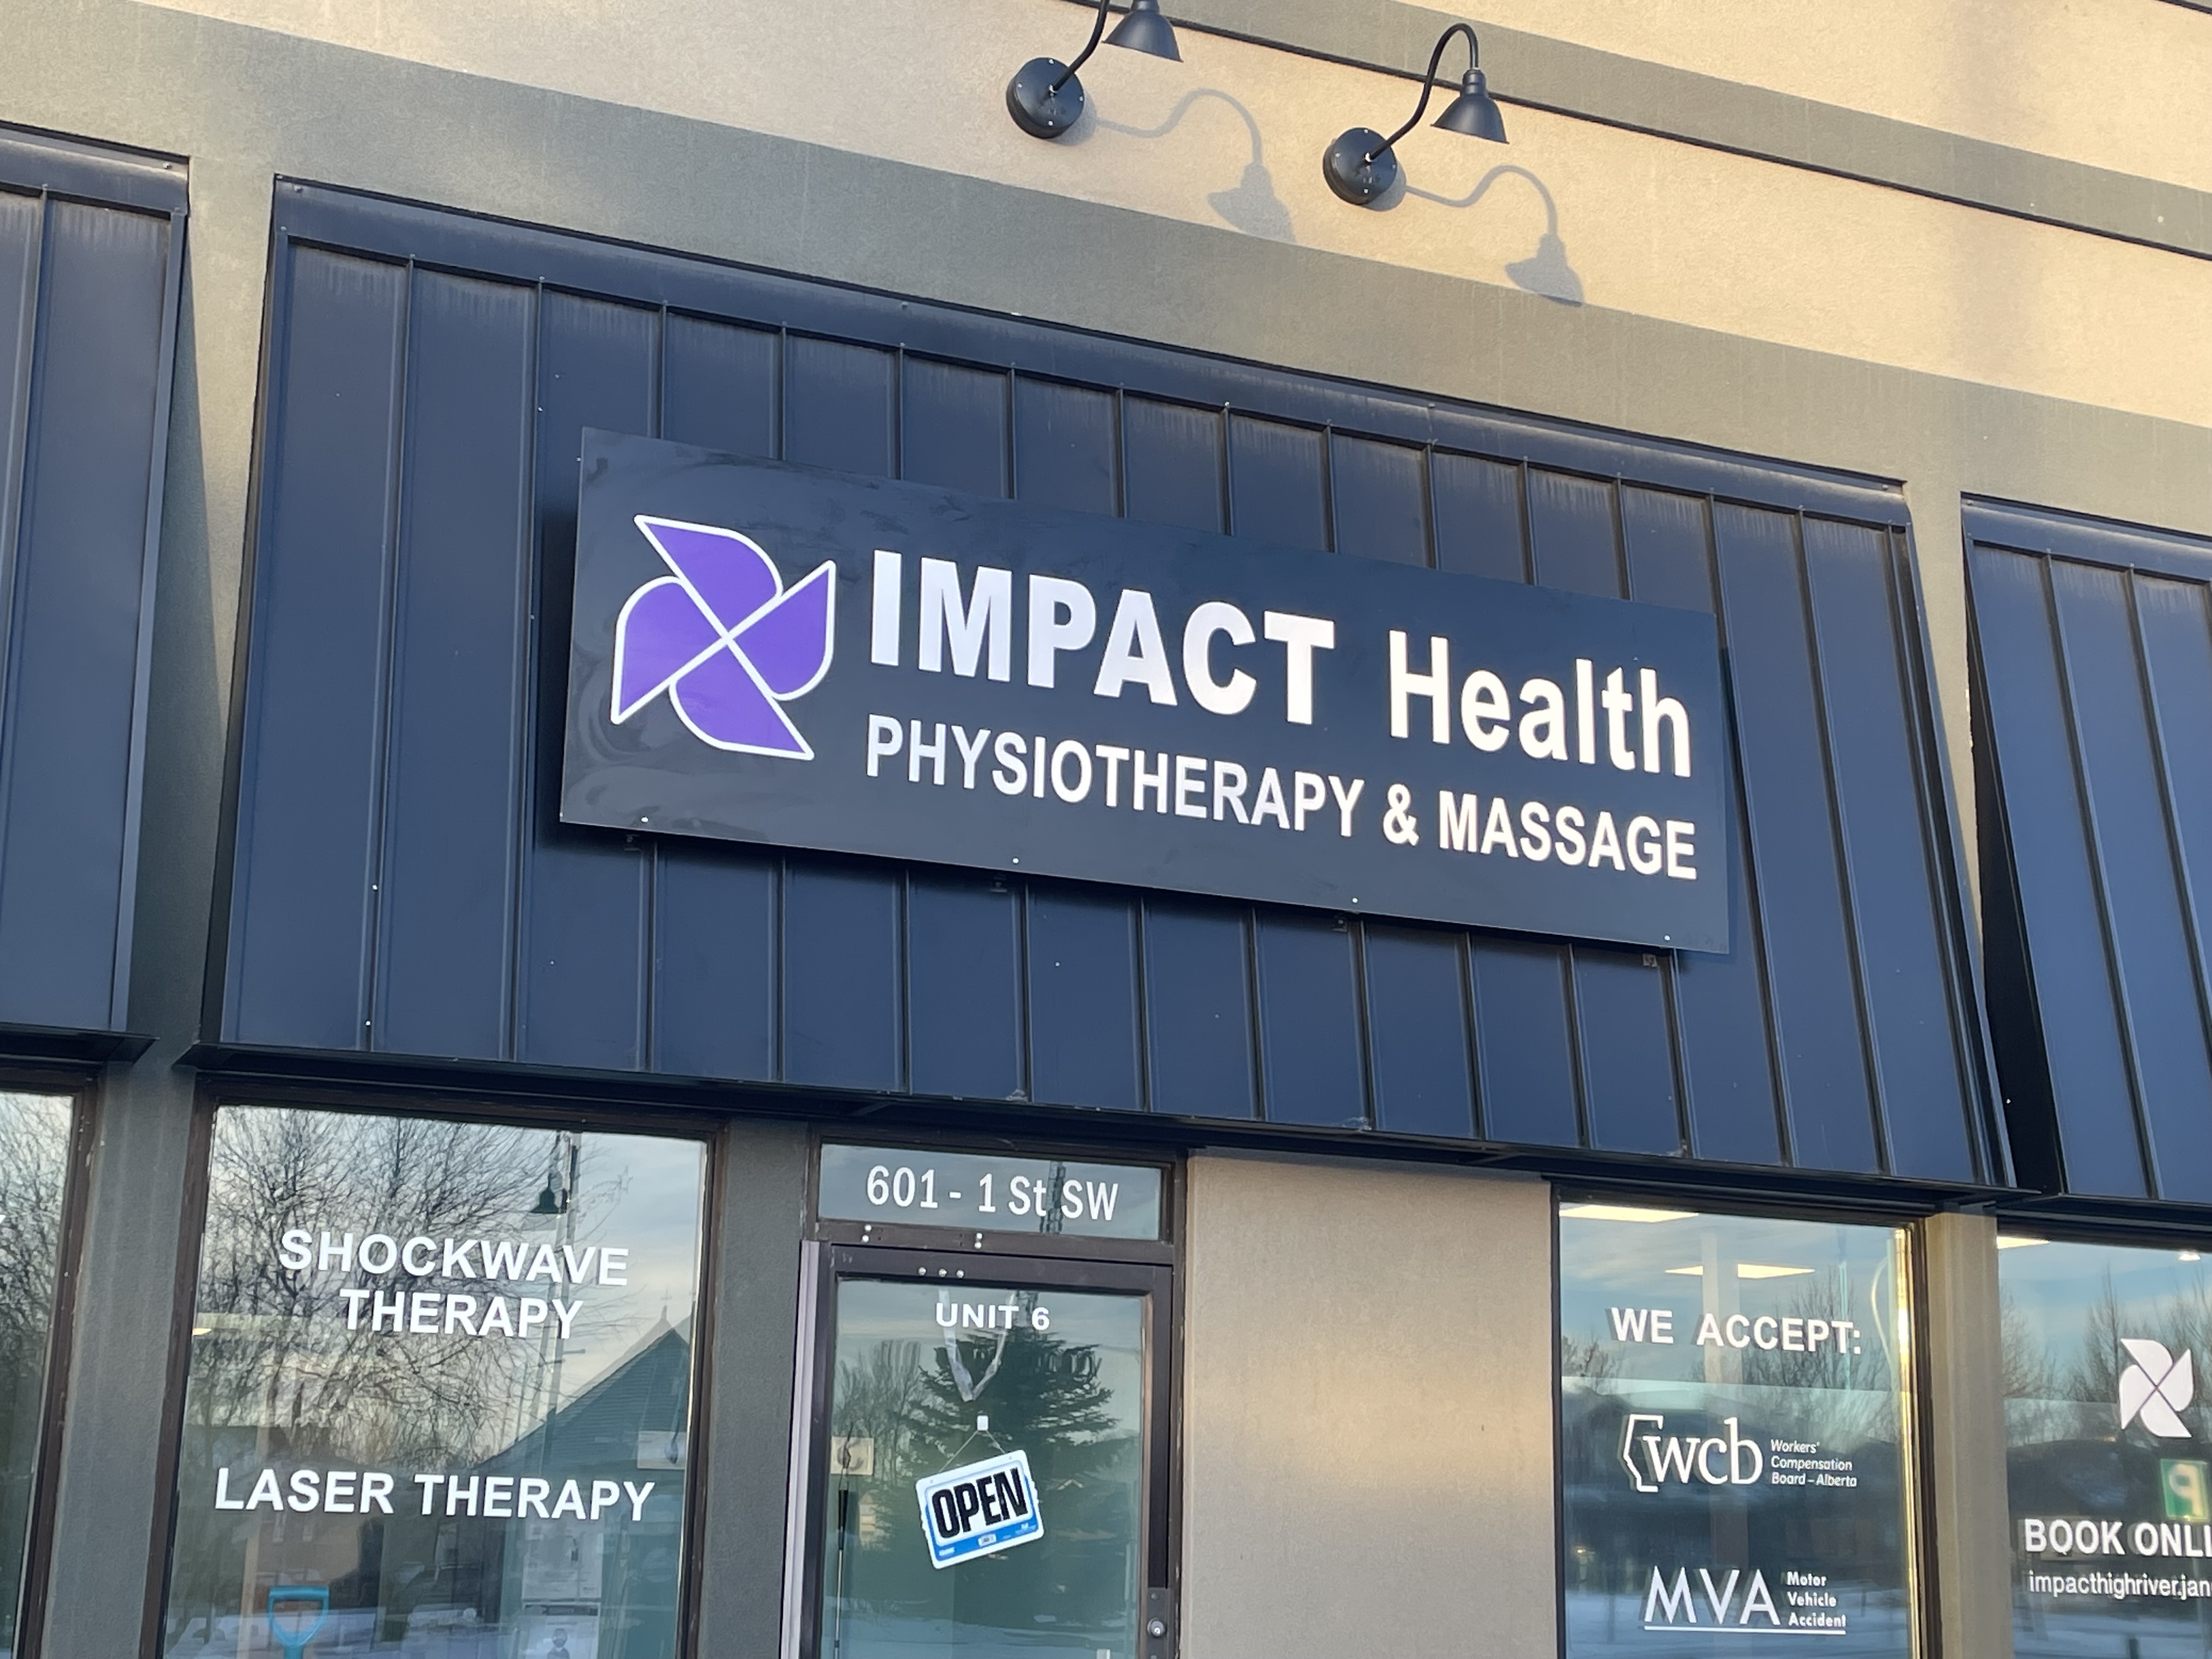 IMPACT Health